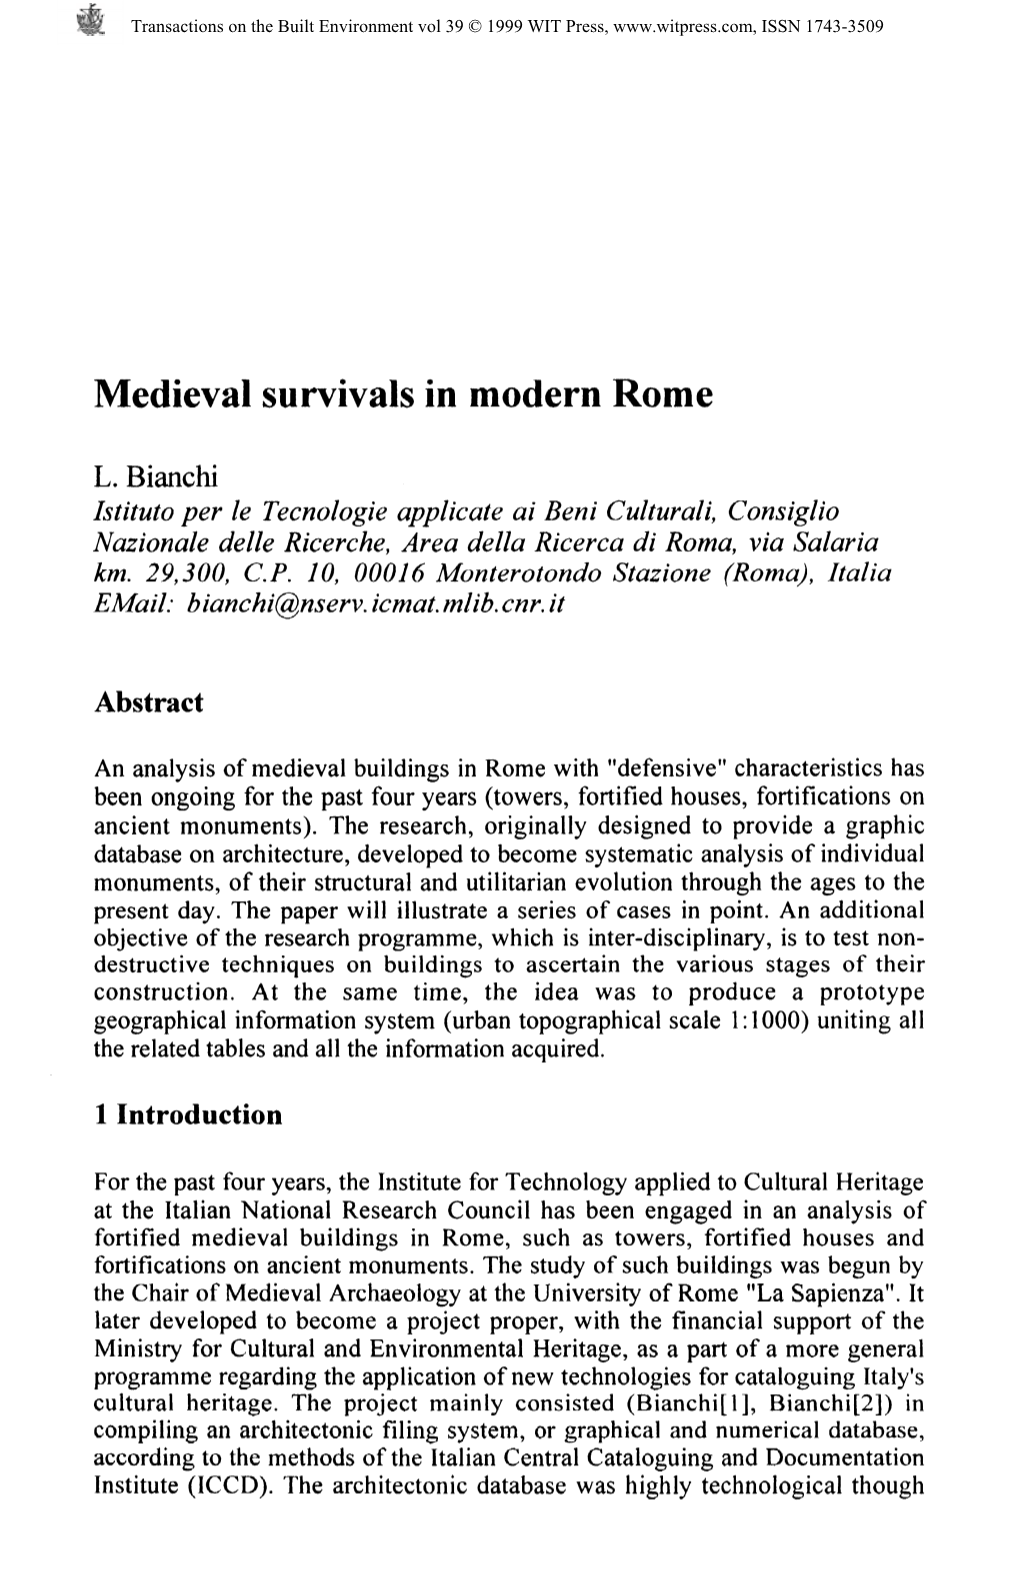 Medieval Survivals in Modern Rome L. Bianchi Istituto Per Le Tecnologie